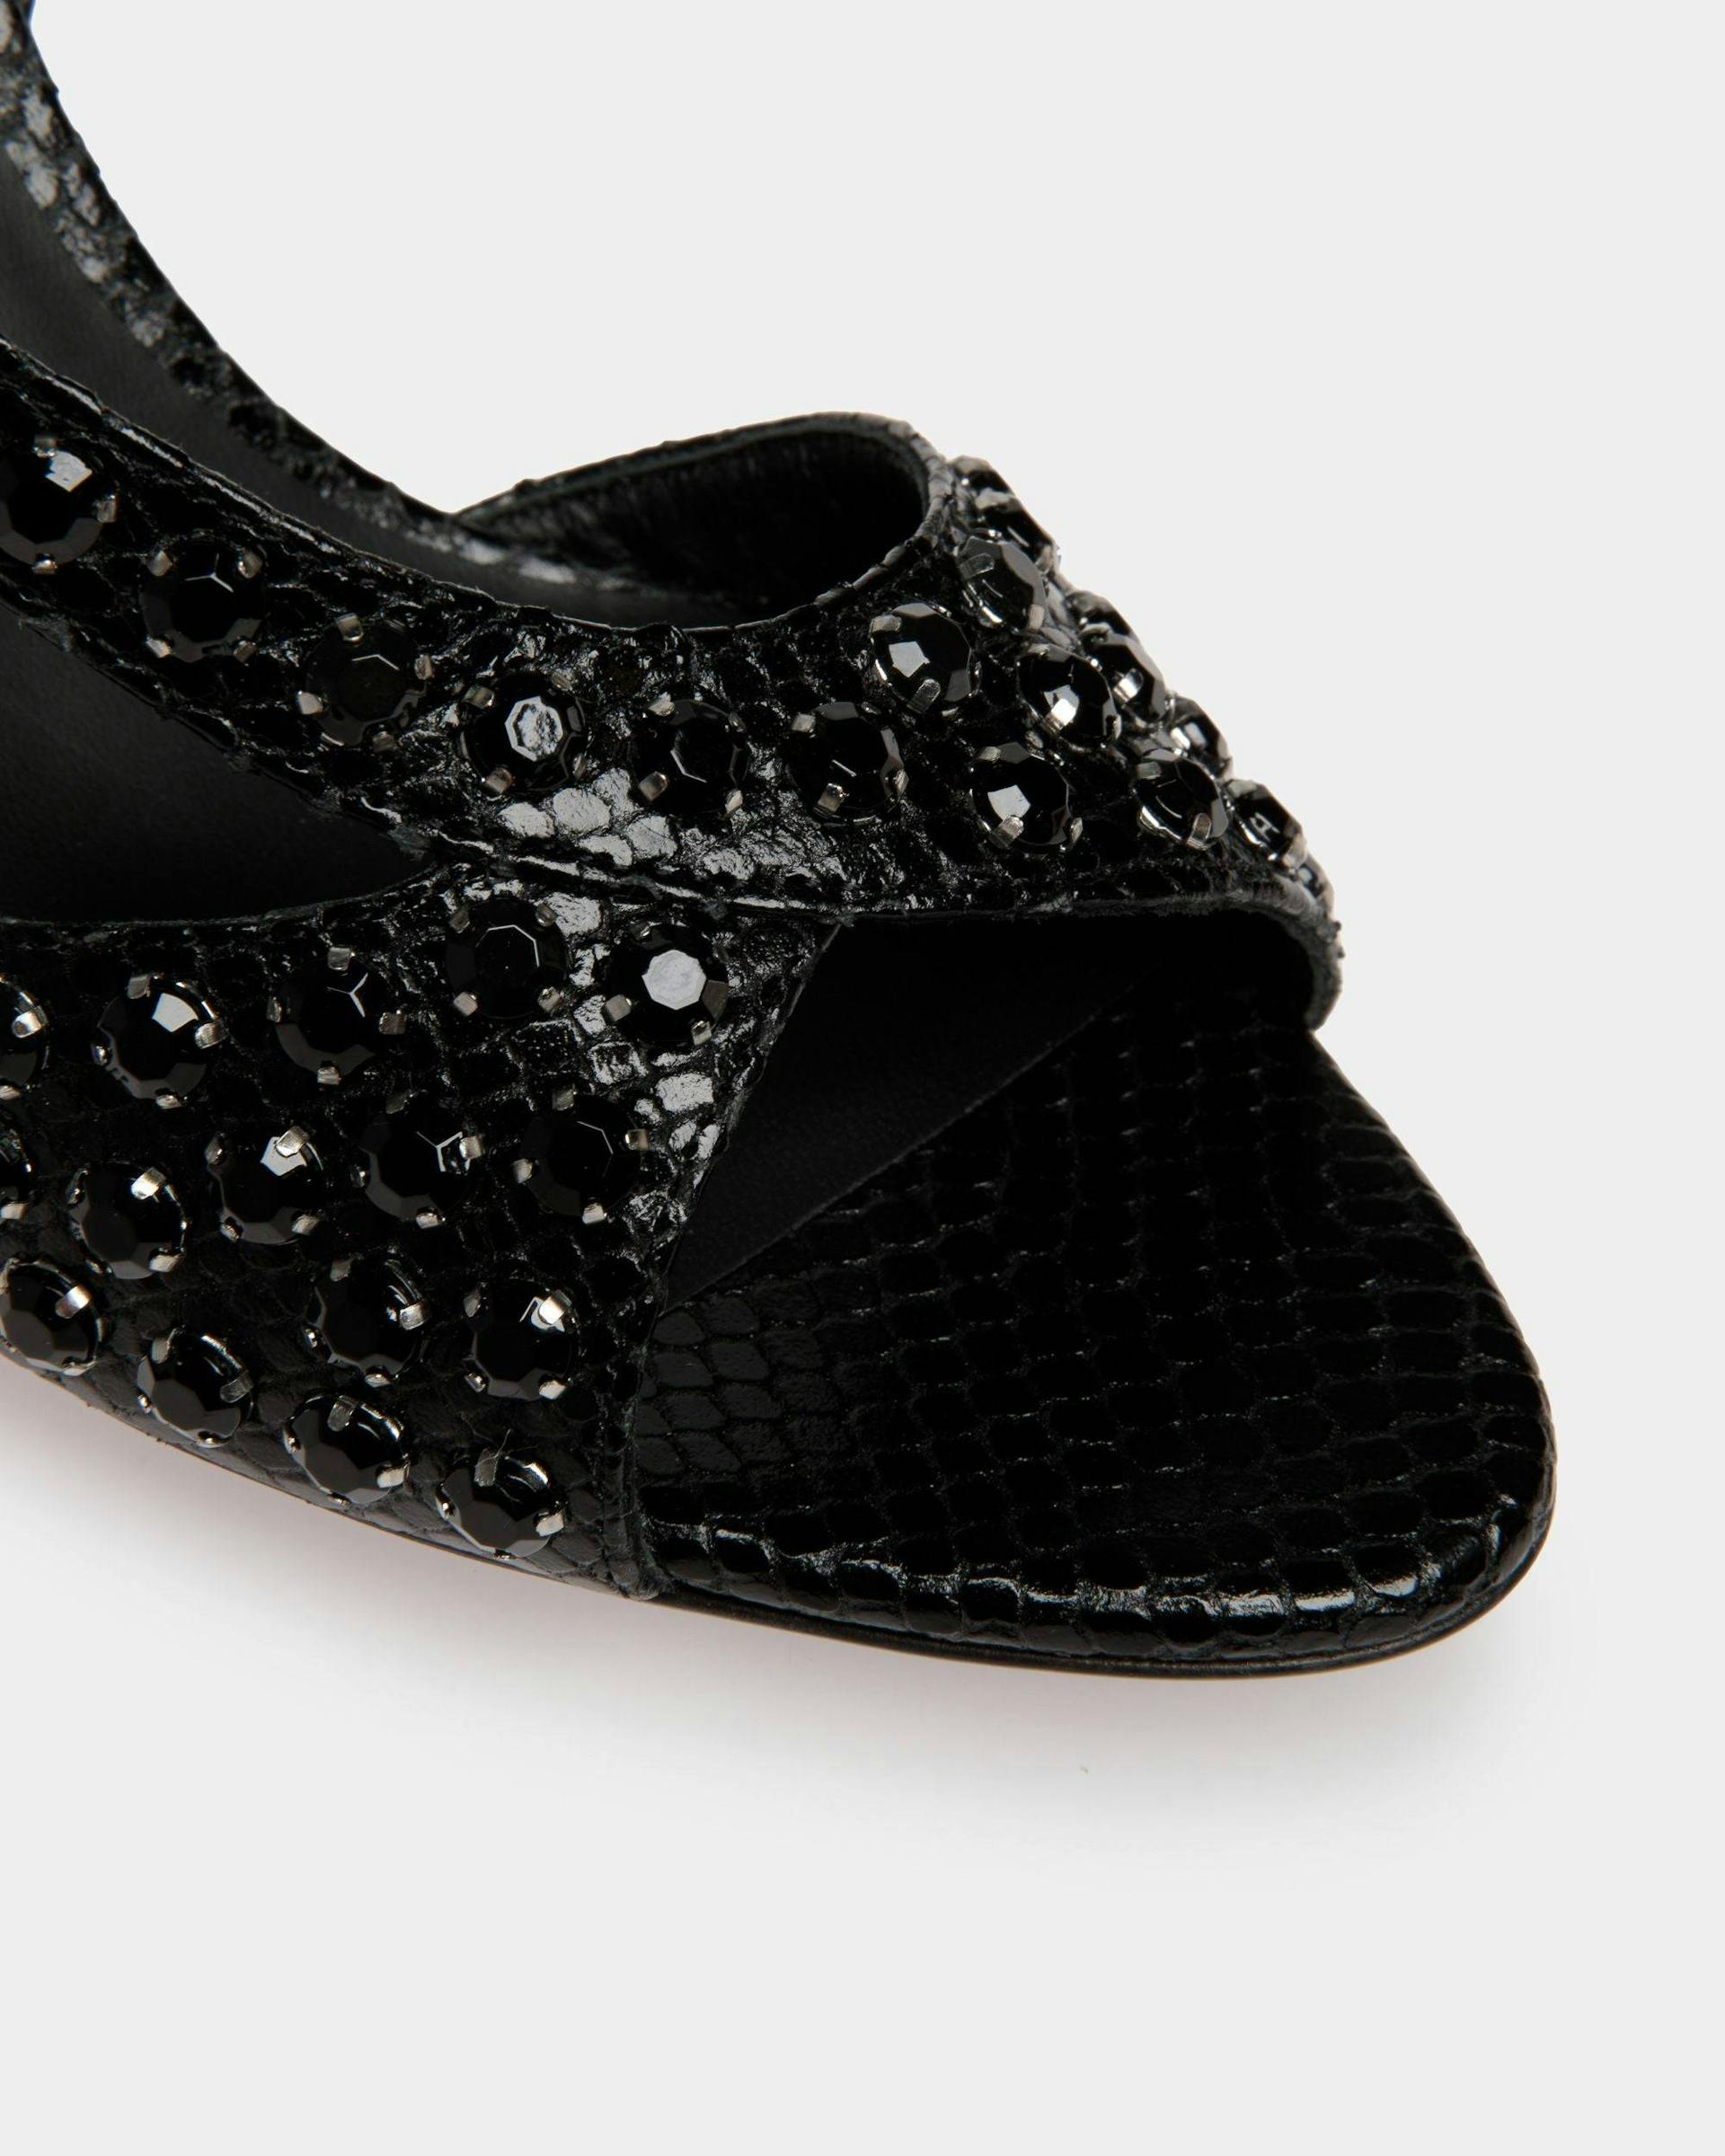 Katy Heeled Sandal in Black Python Printed Leather - Women's - Bally - 04